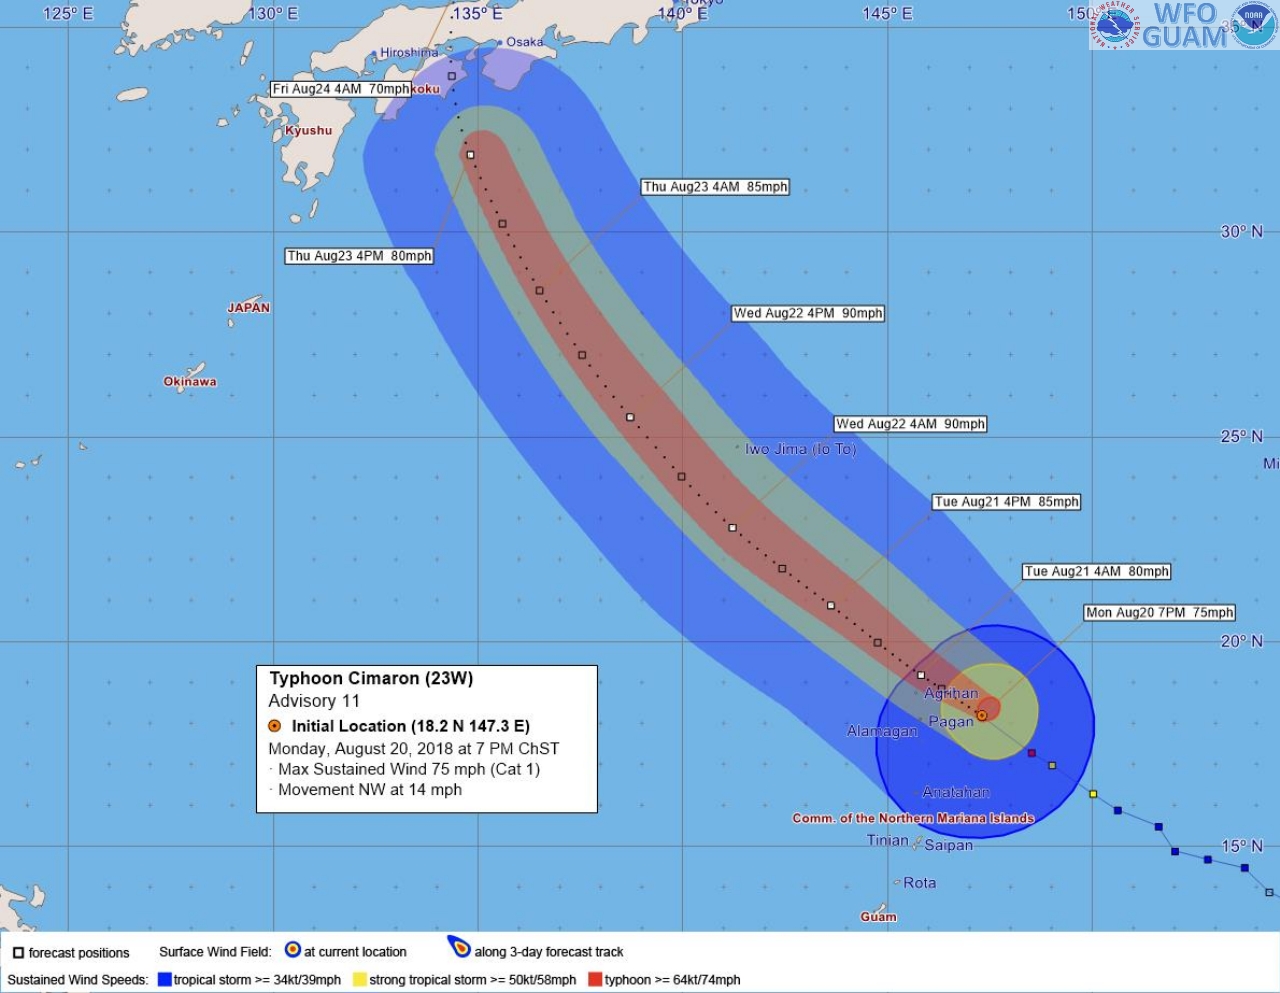 Typhoon Cimaron Forecast Track and Wind Distribution (Courtesy: NWS Guam).